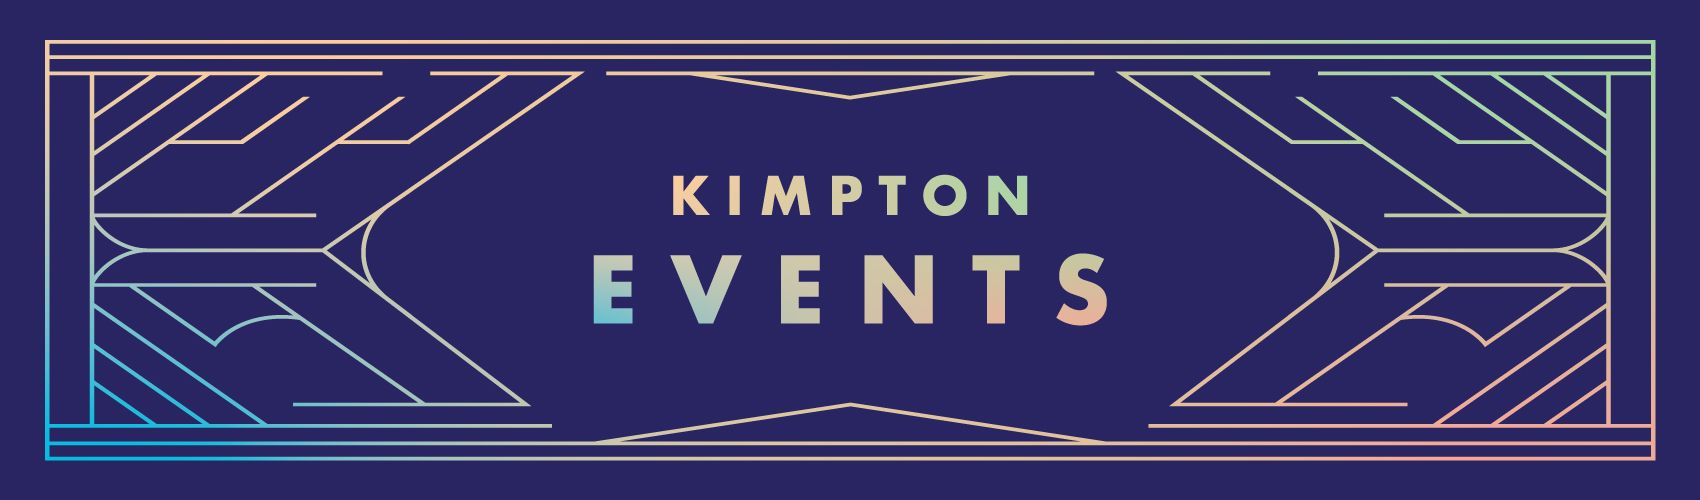 New Orleans Events Calendar 2022 Hotel Events Calendar | Kimpton Hotels + Restaurants